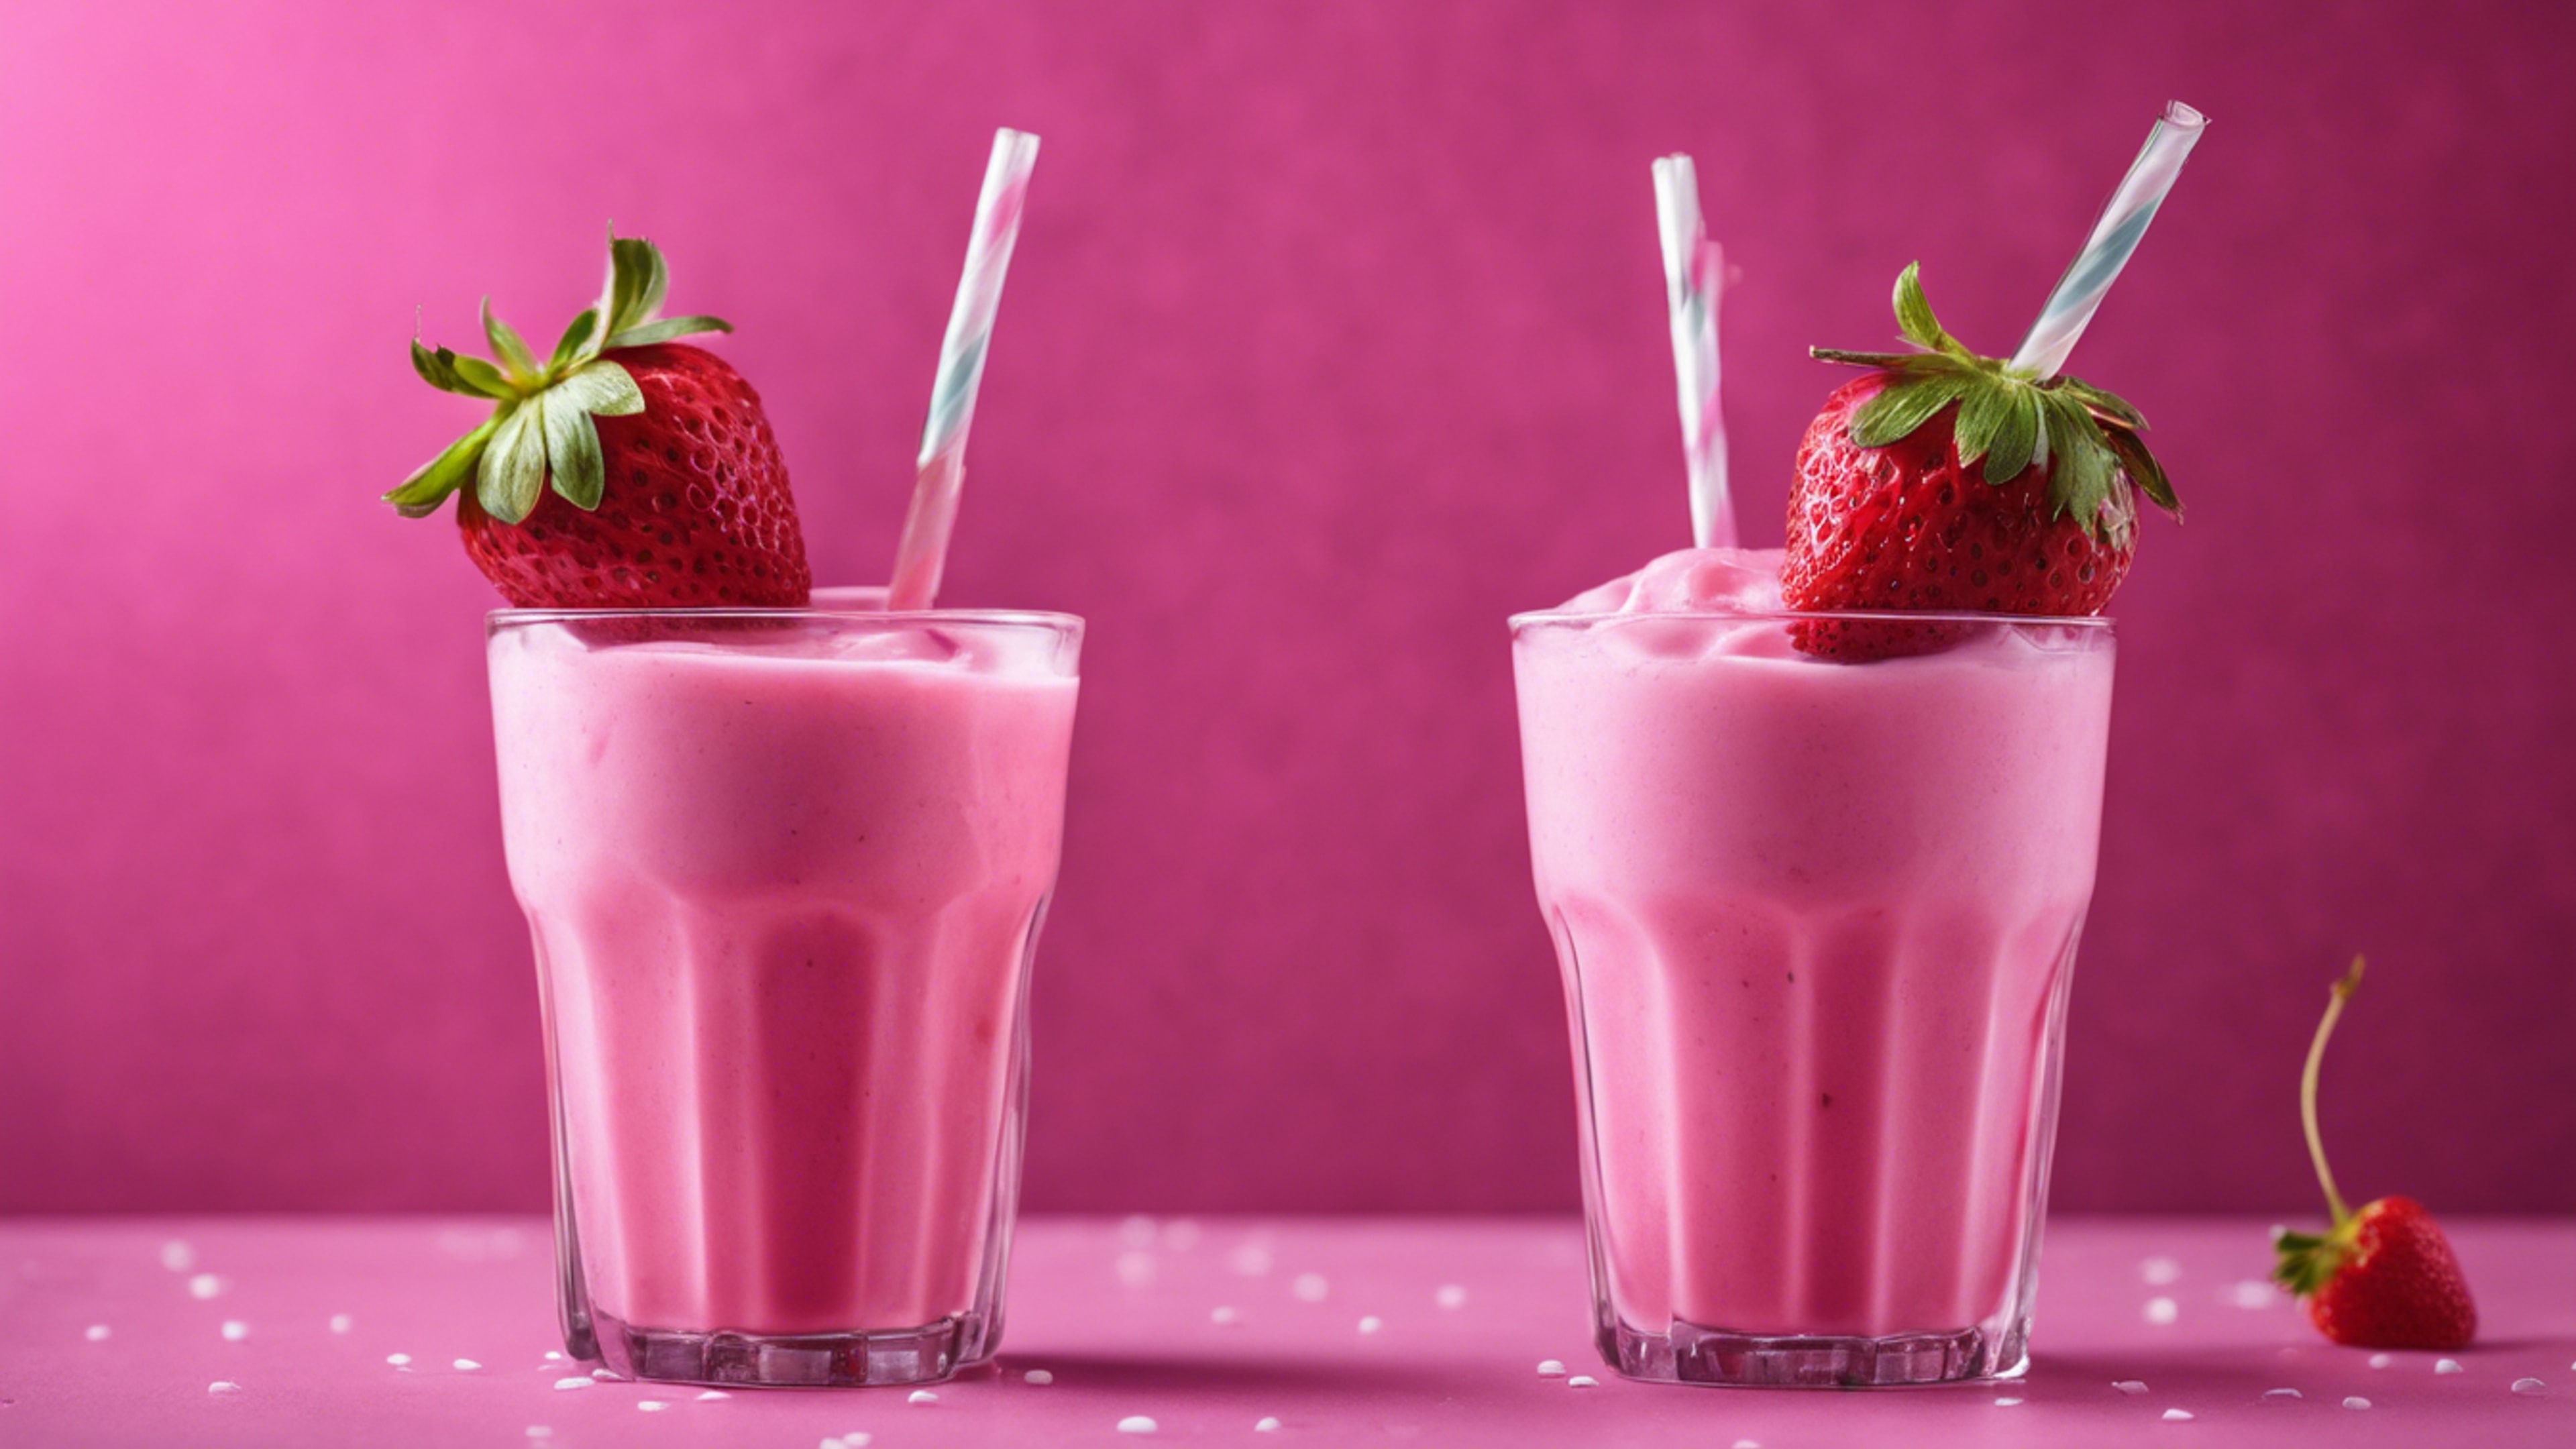 Two glasses filled with bright pink strawberry milkshake garnished with straws and cherries. Divar kağızı[367e513037cf4f879d8a]